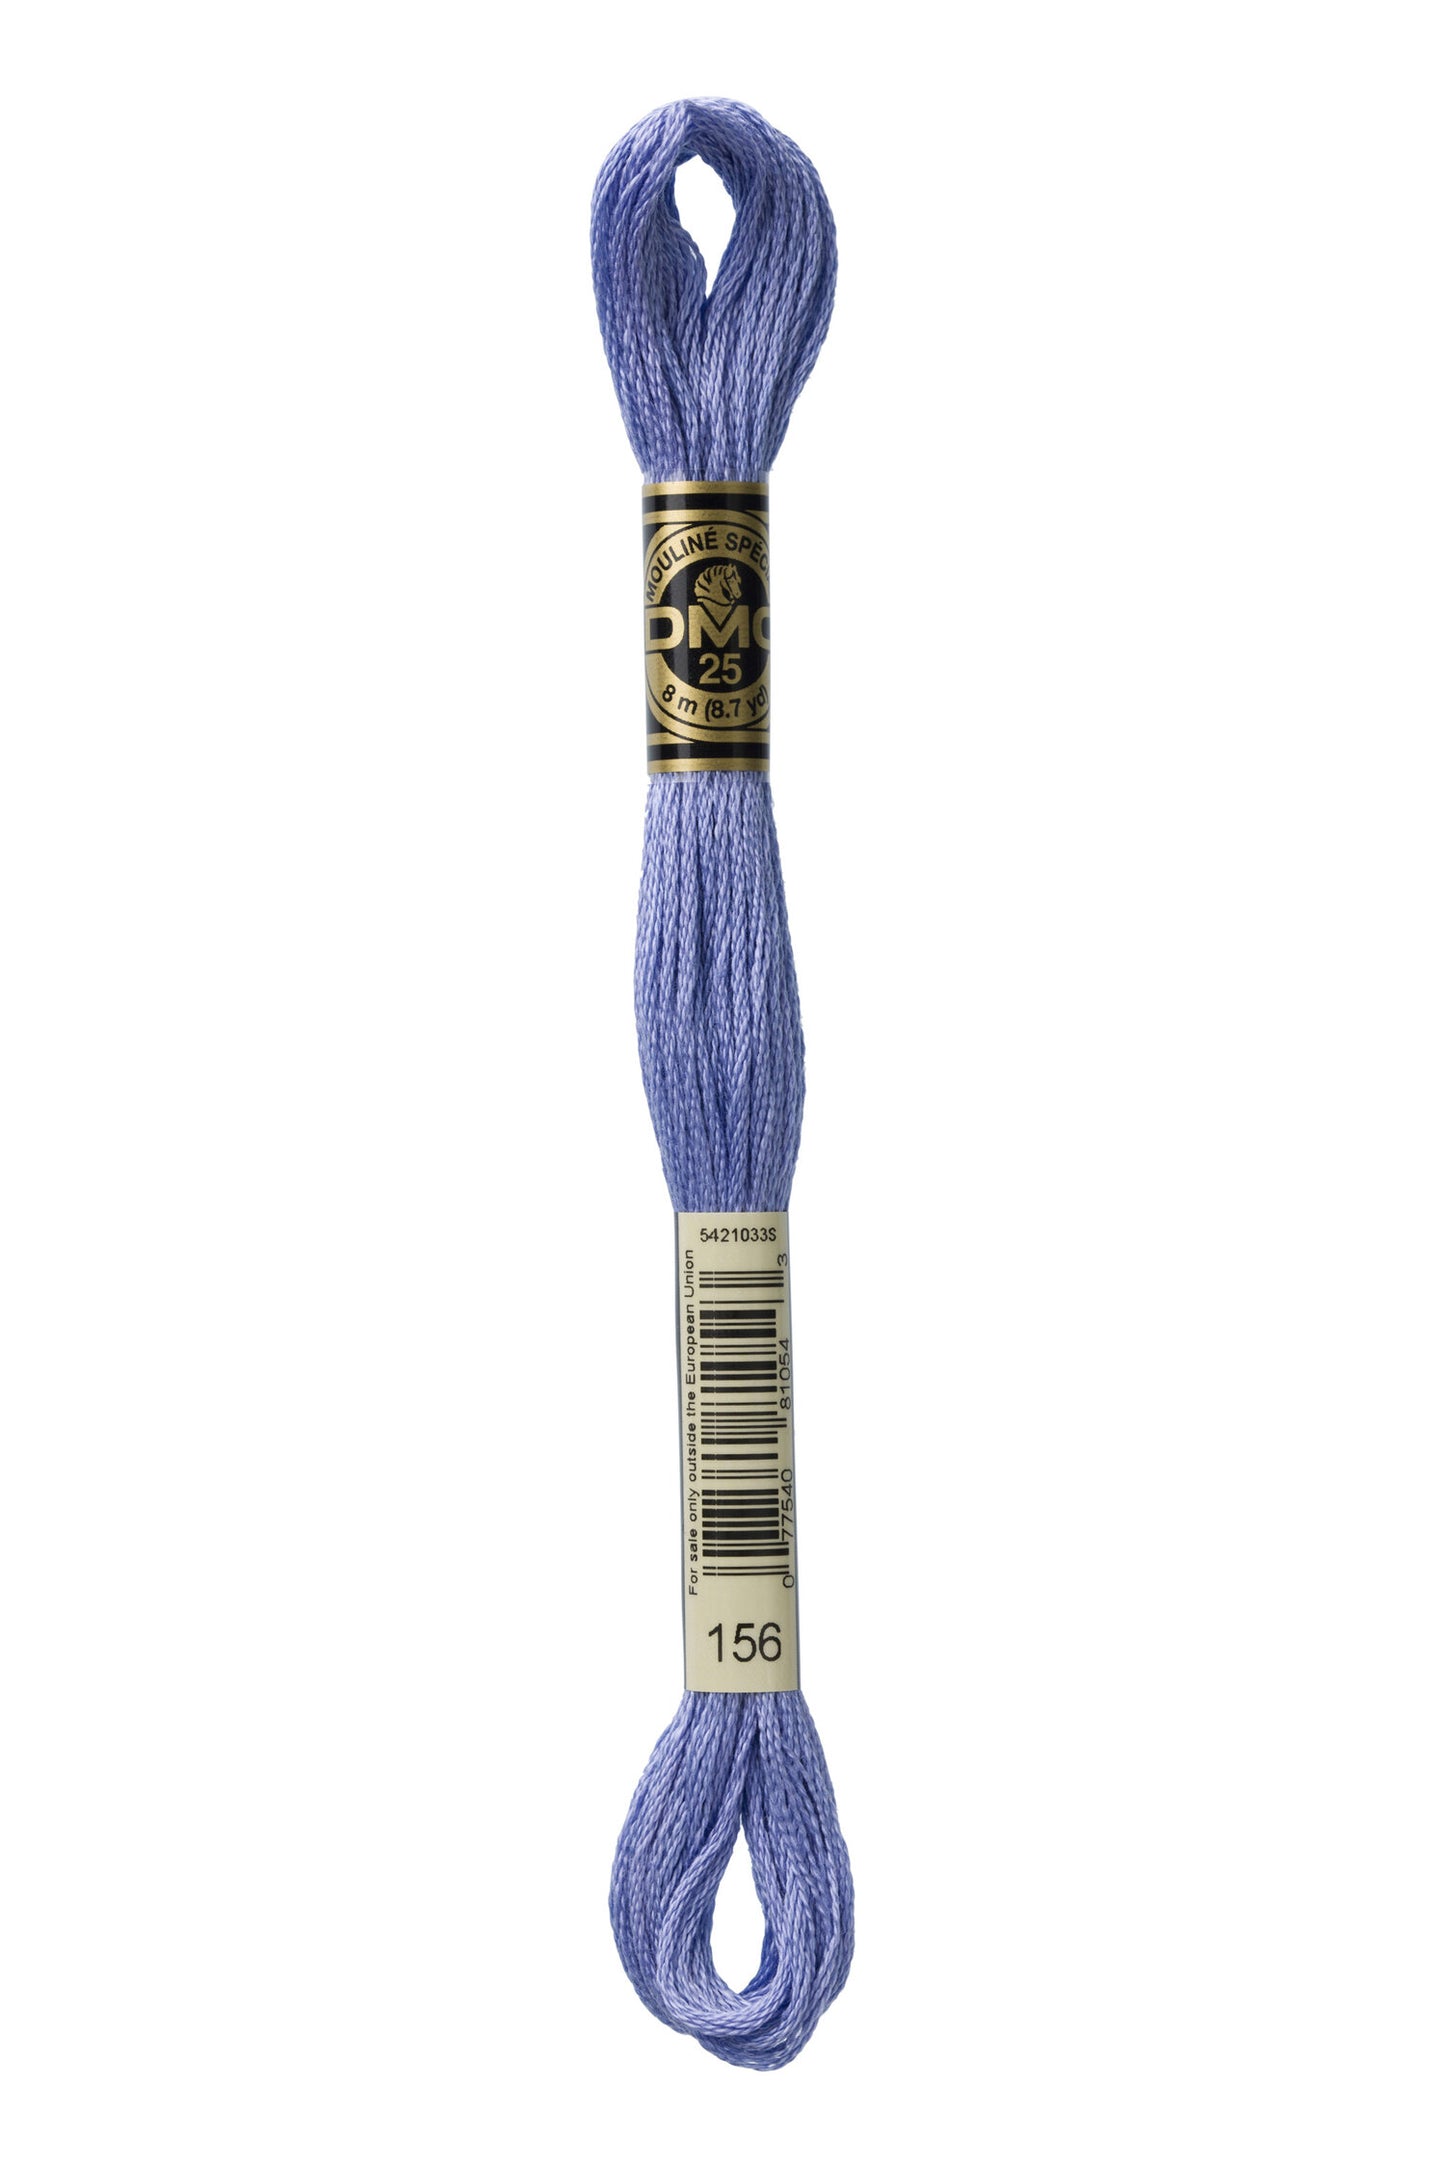 DMC 156 - Blue - Medium - DMC 6 Strand Embroidery Thread, Thread & Floss, Thread & Floss, The Crafty Grimalkin - A Cross Stitch Store